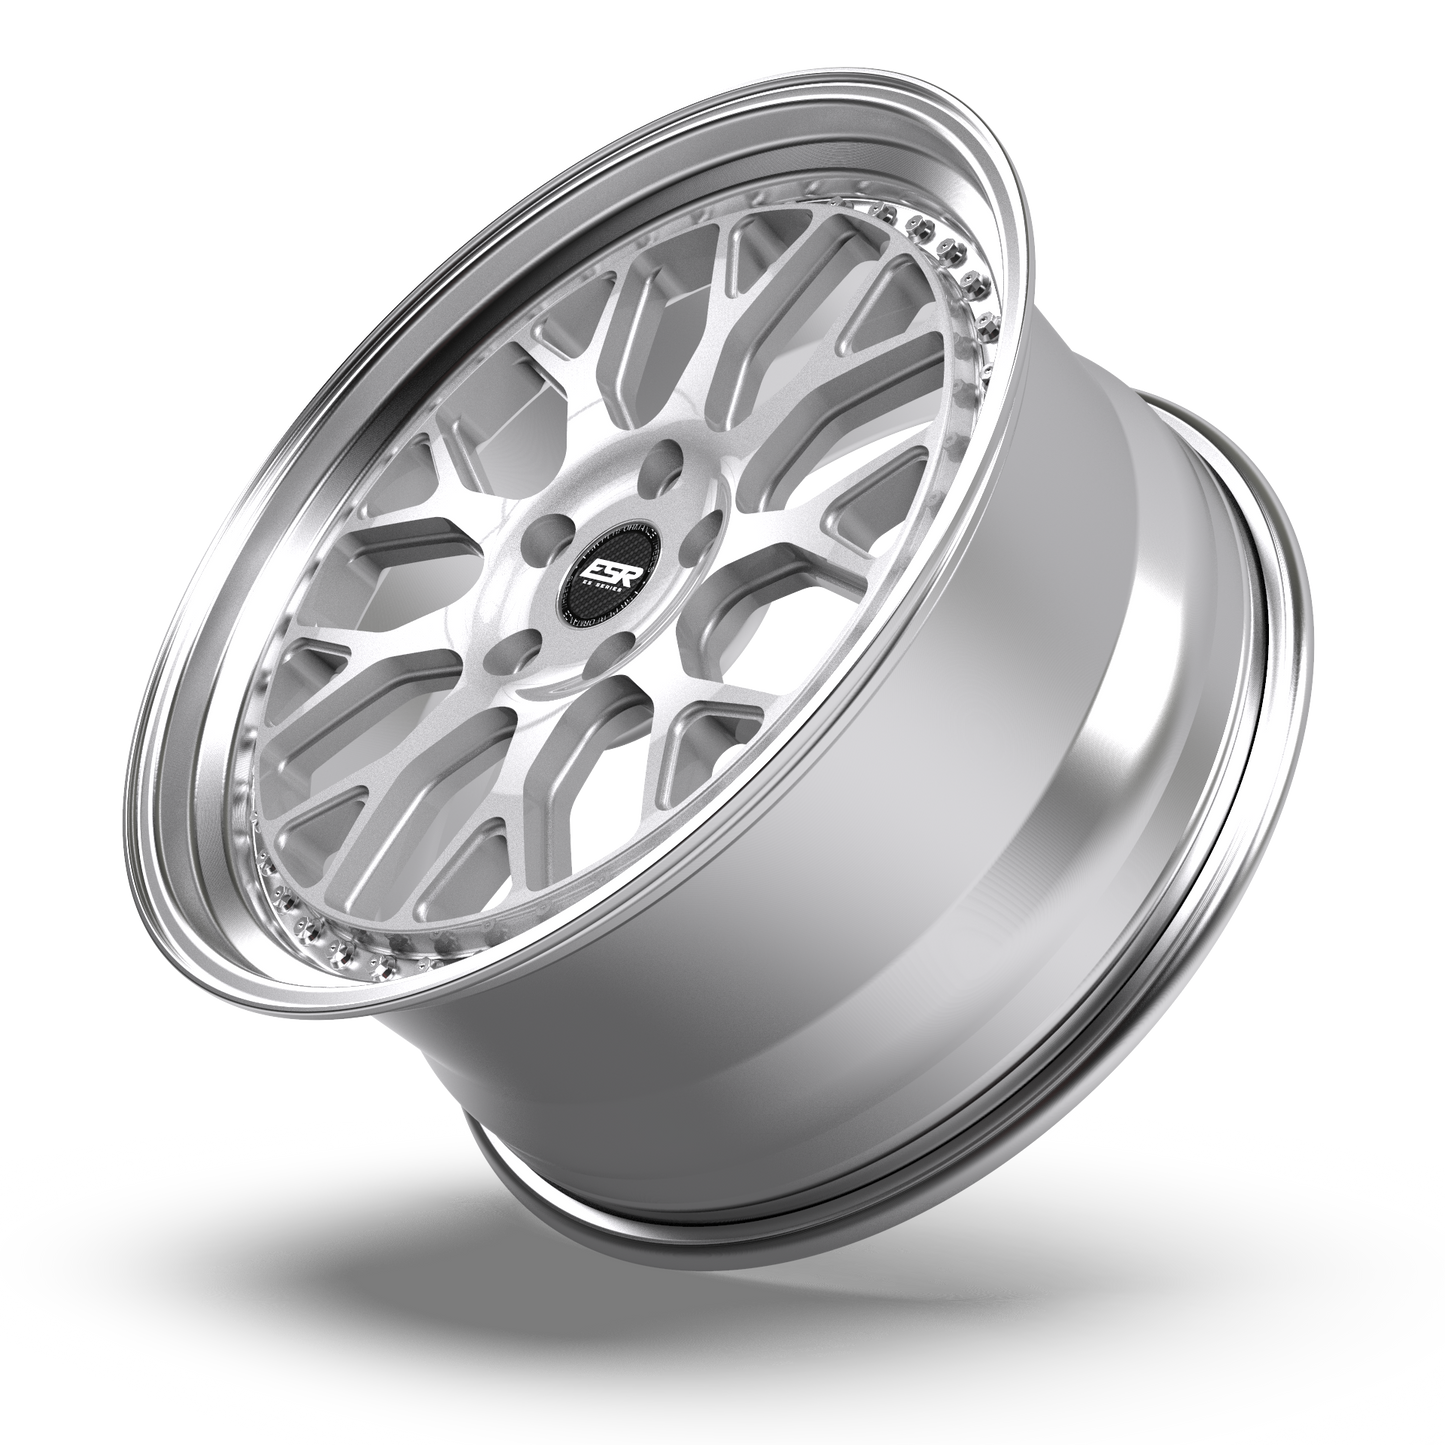 ESR Wheels CS1 Hyper Silver-Wheels-ESR Wheels-JDMuscle